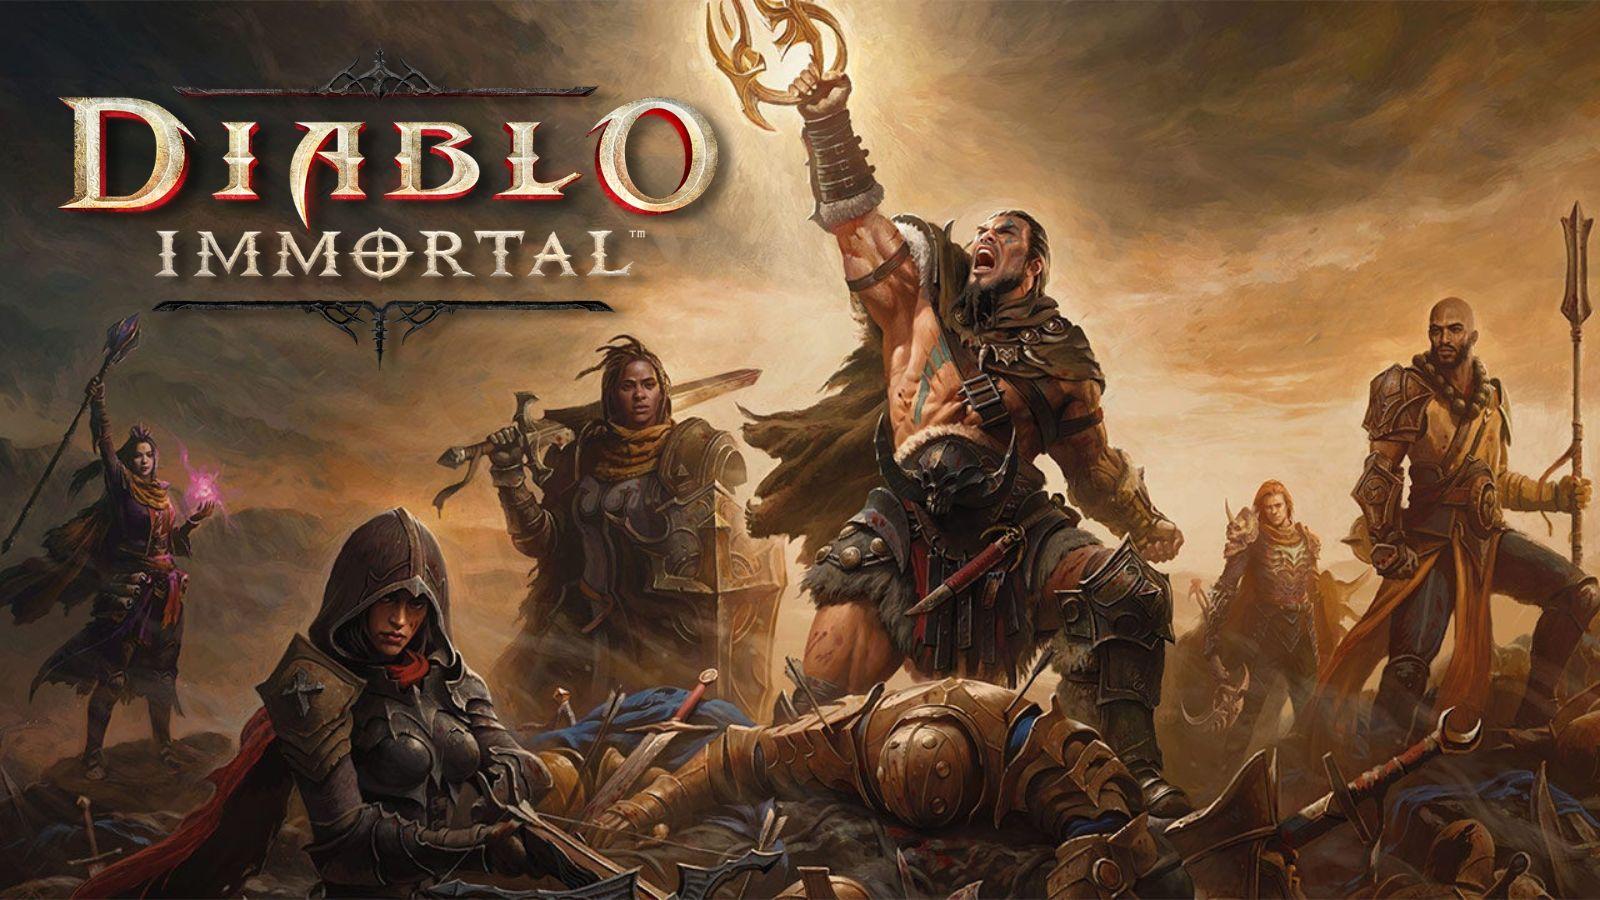 GamePOW - Diablo Immortal already over? Several streamers